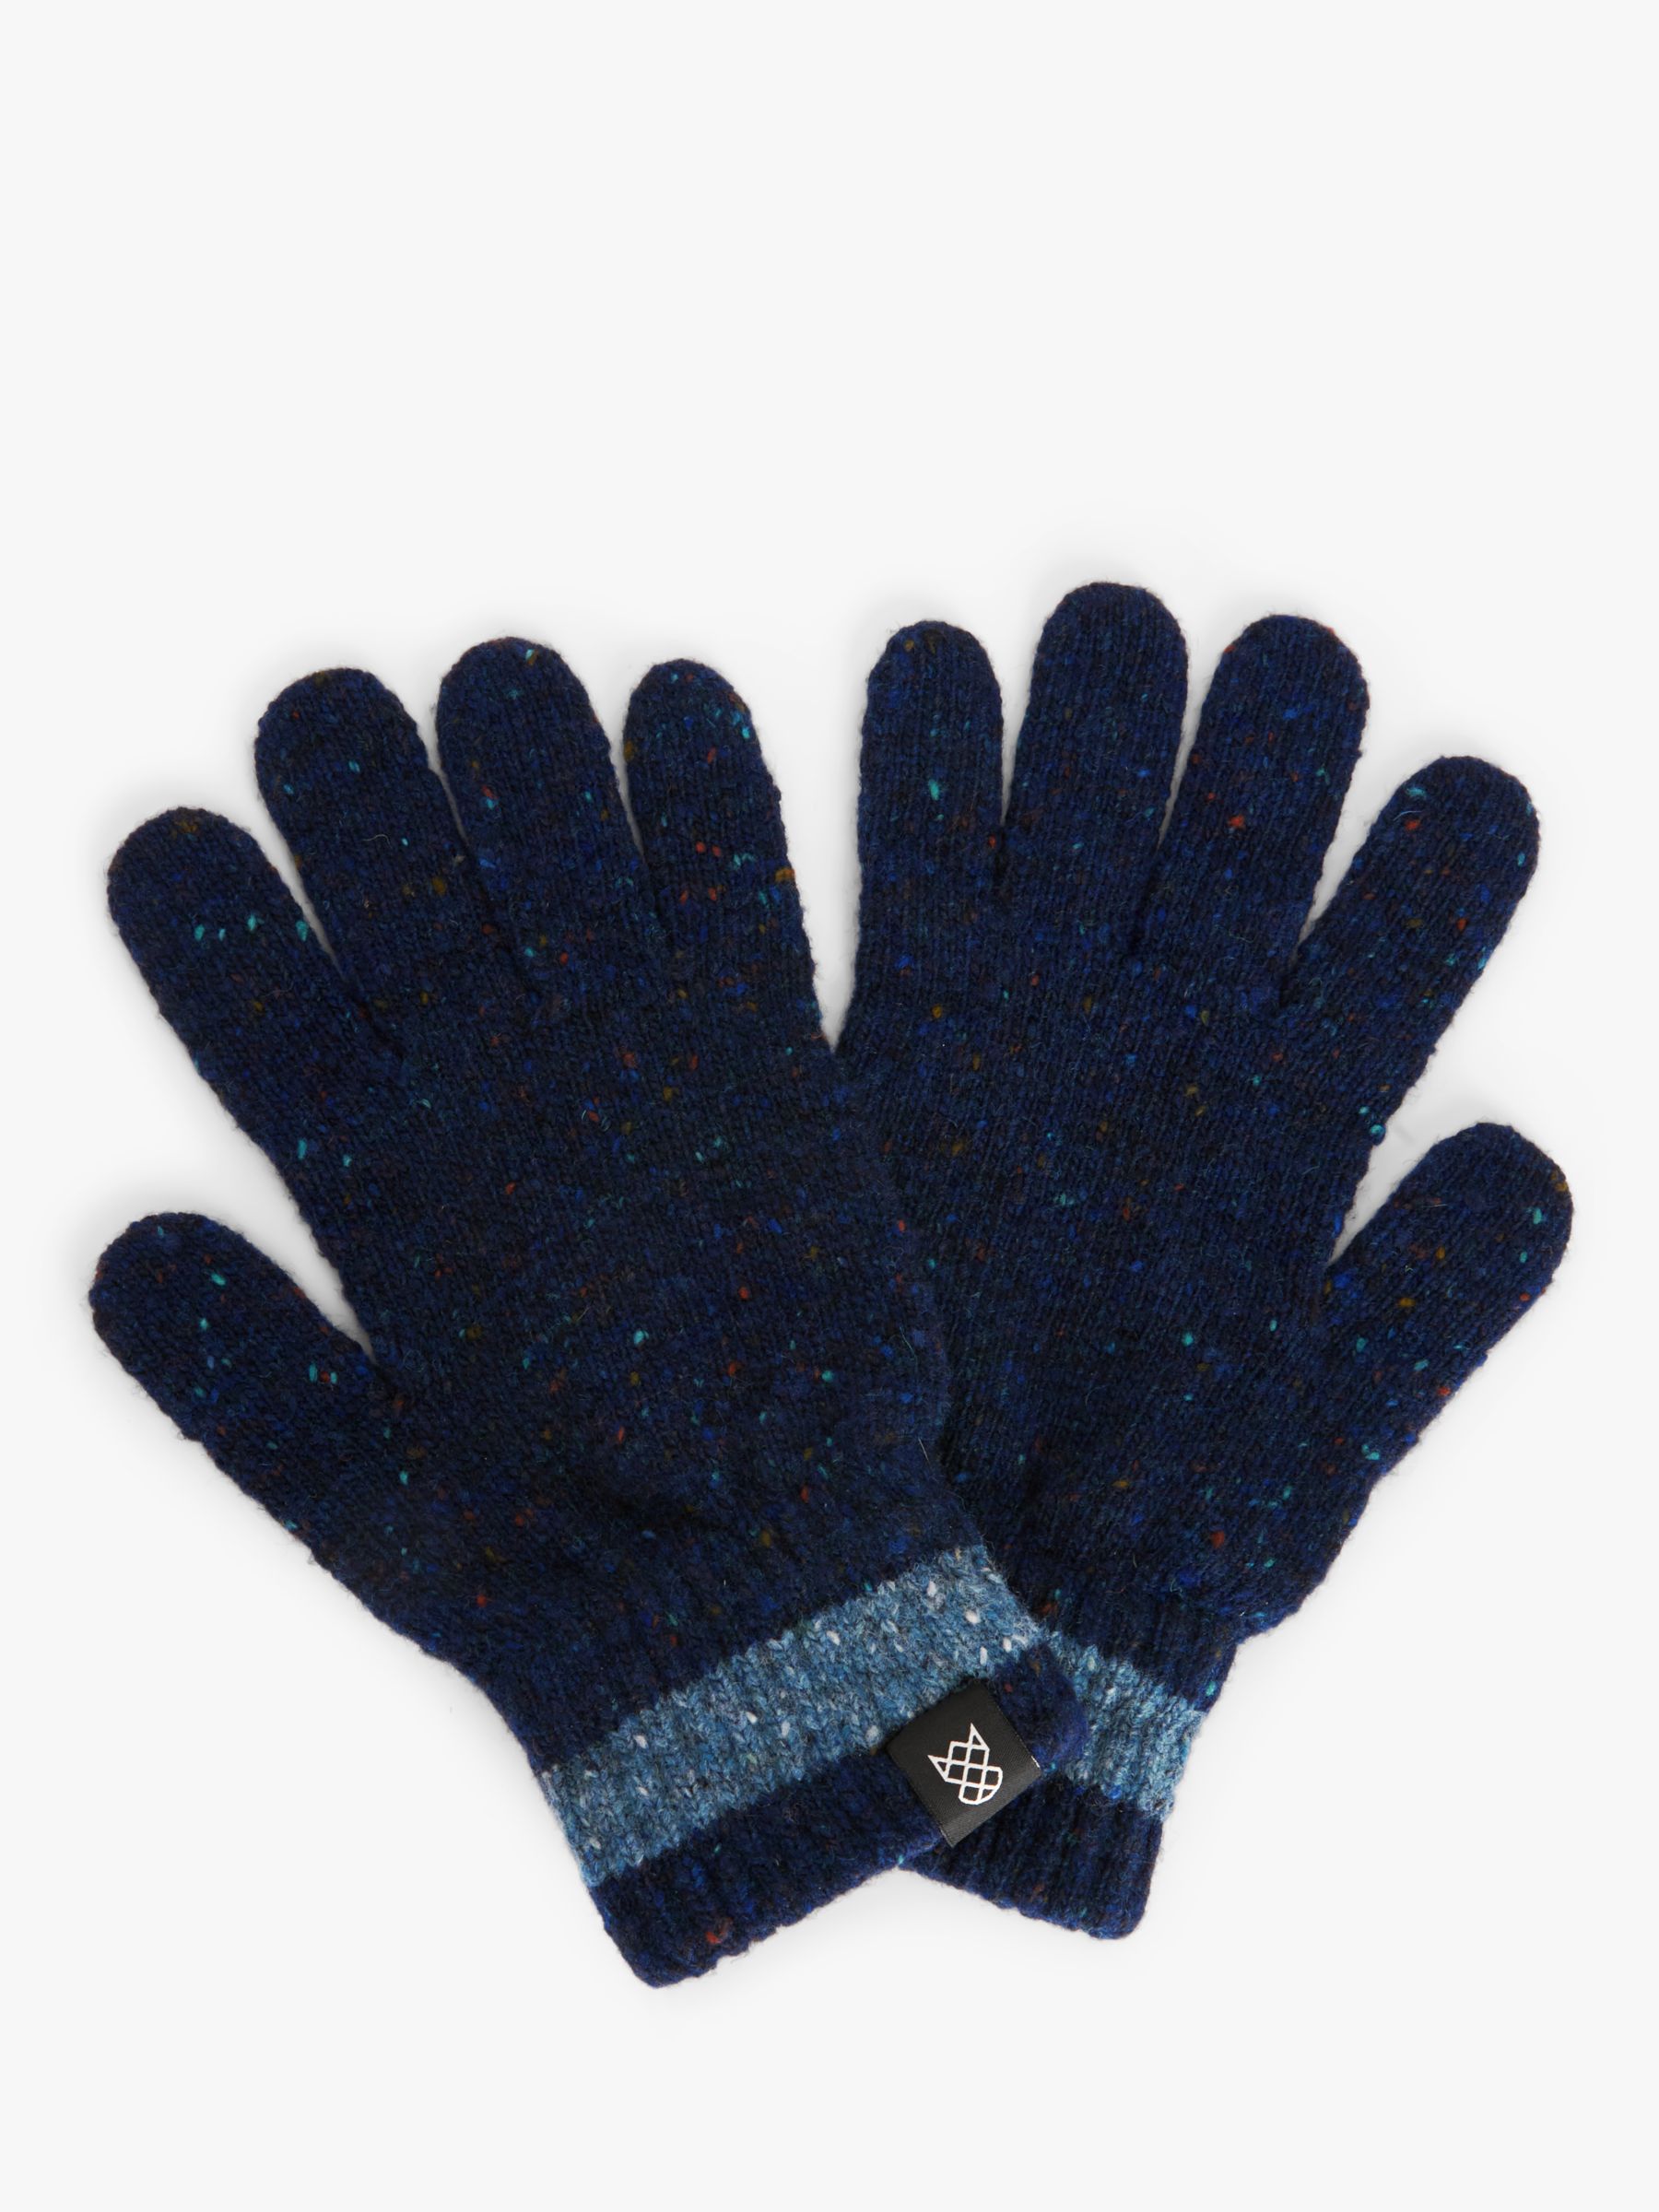 John Lewis Made in UK Donegal Wool Gloves, Navy/Blue